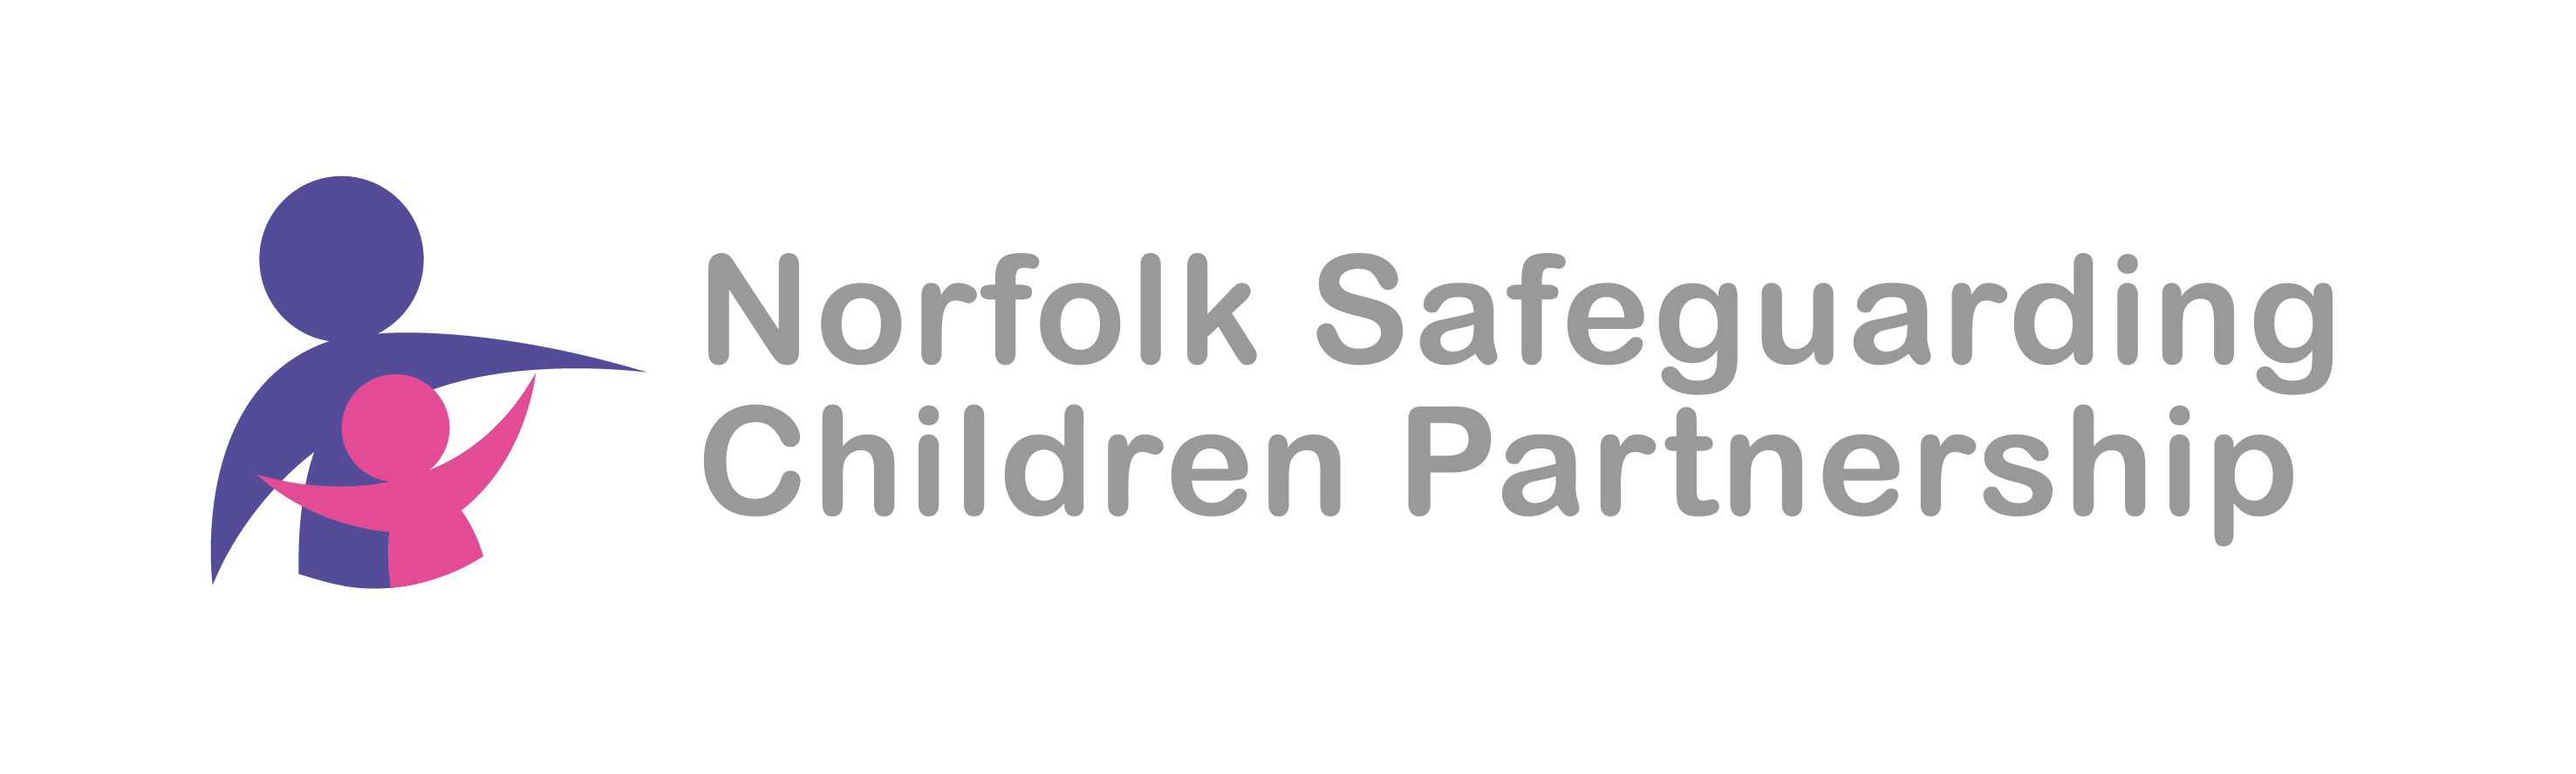 Norfolk Safeguarding Children Partnership logo